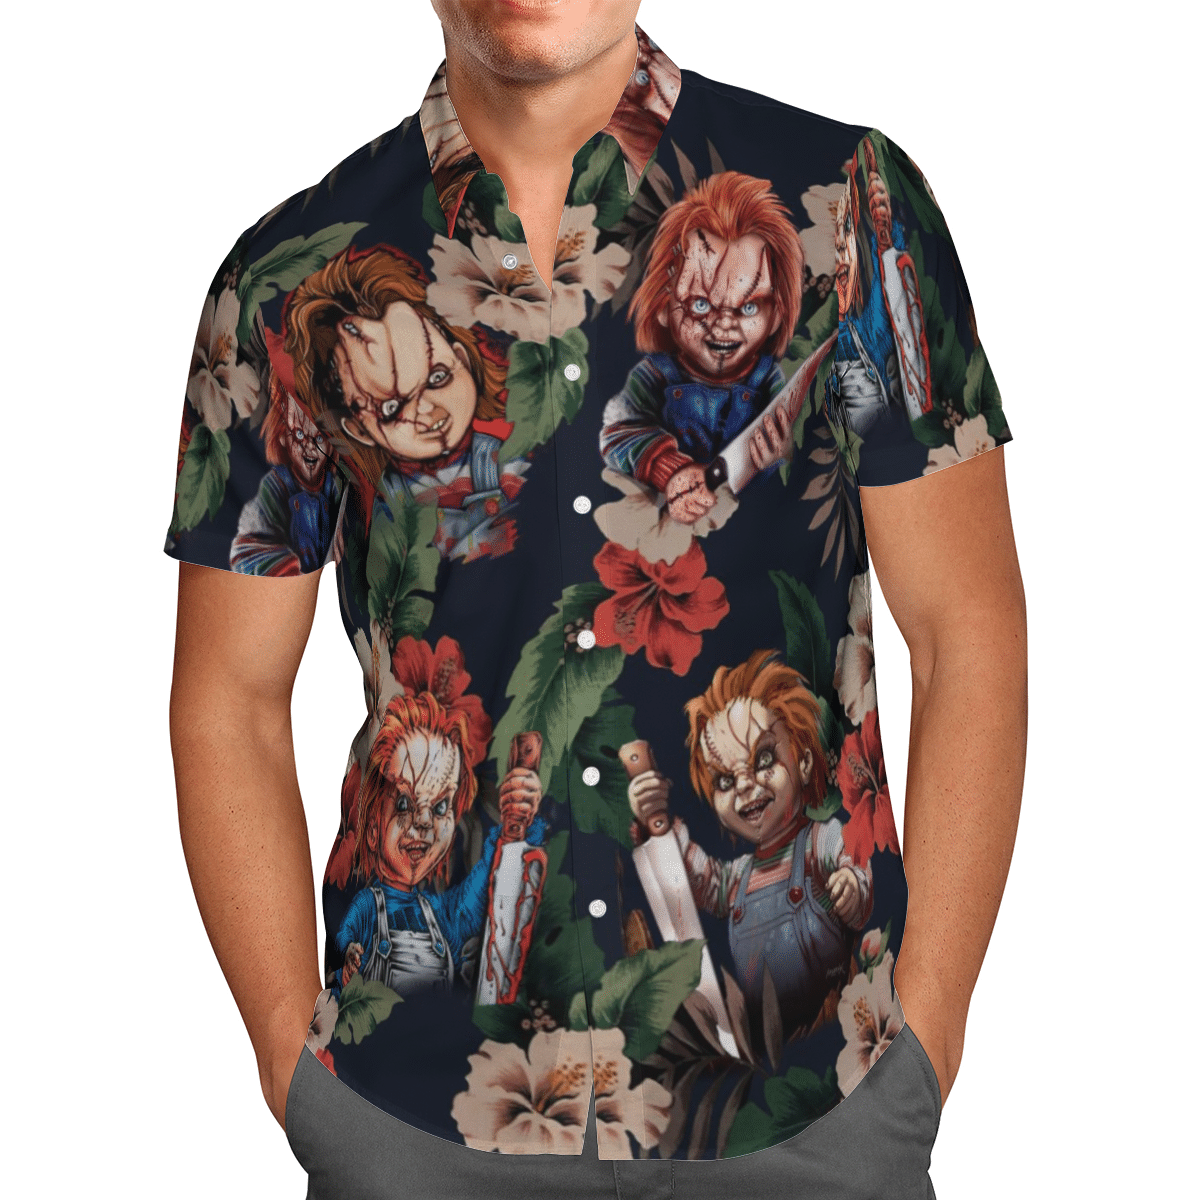 Chucky Hawaiian shirt and short – LIMITED EDITION